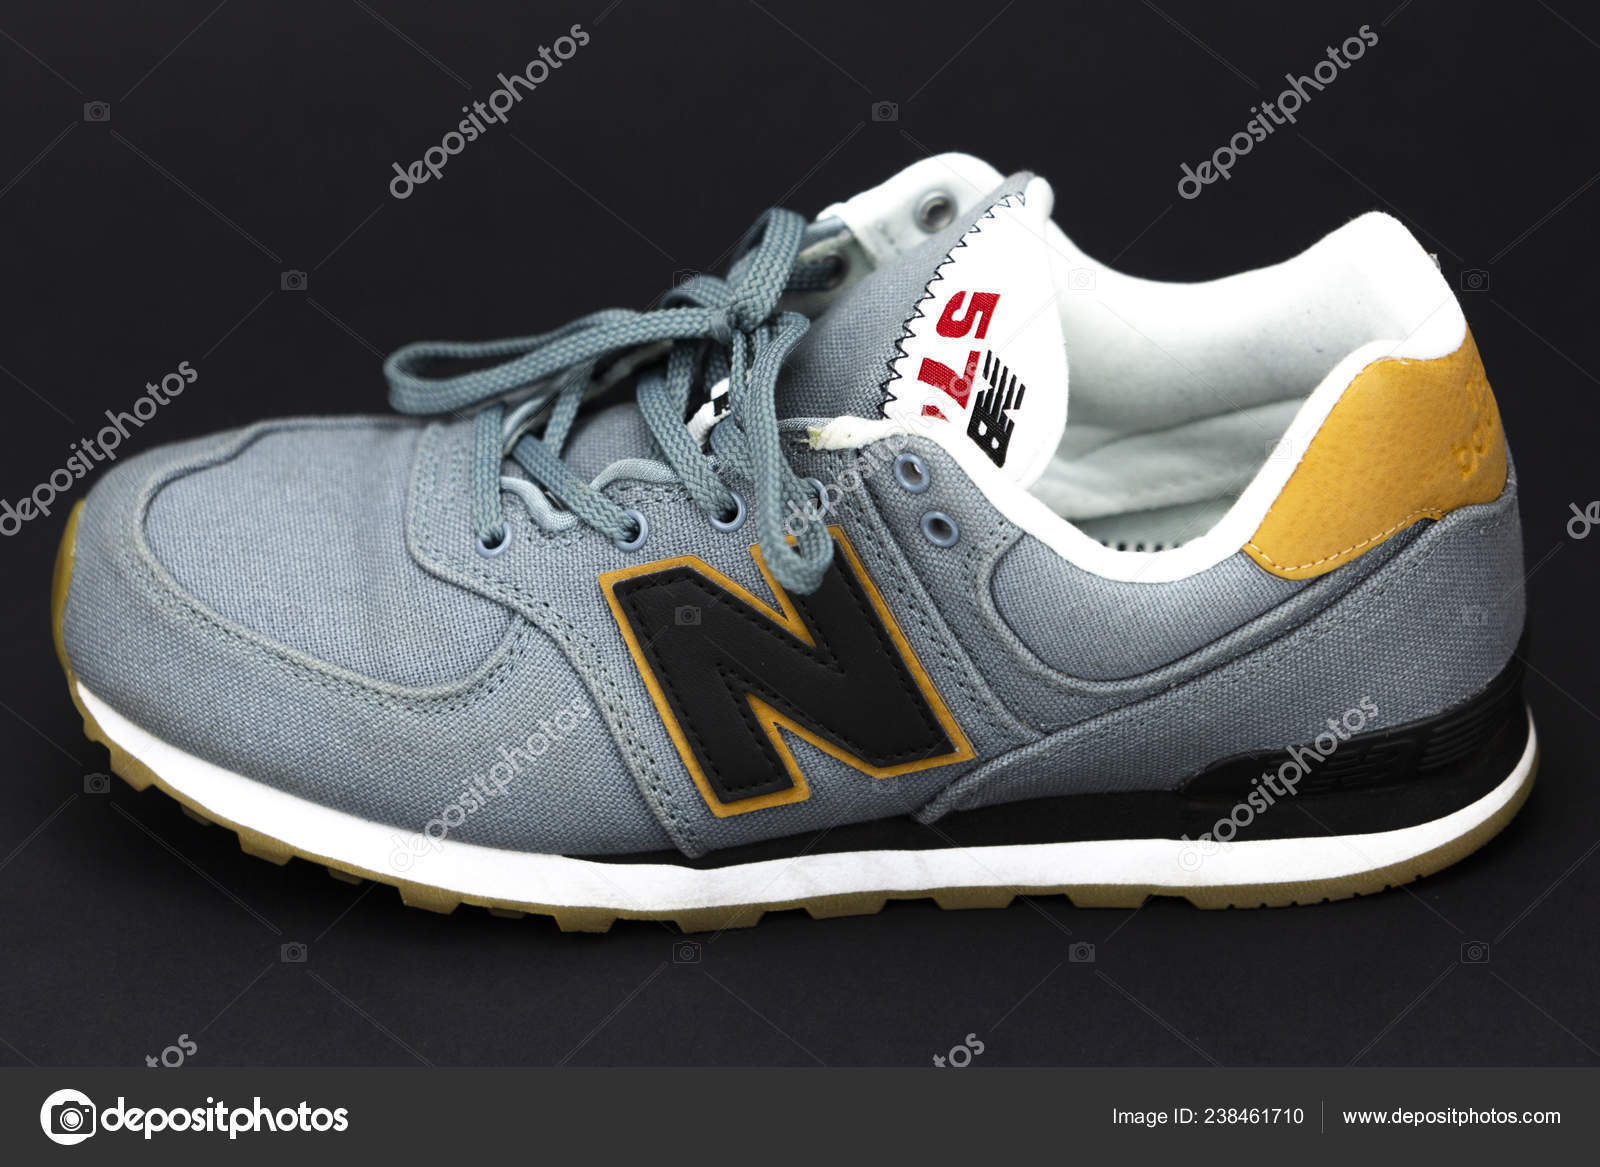 New Balance NB 574 athletic shoes on 